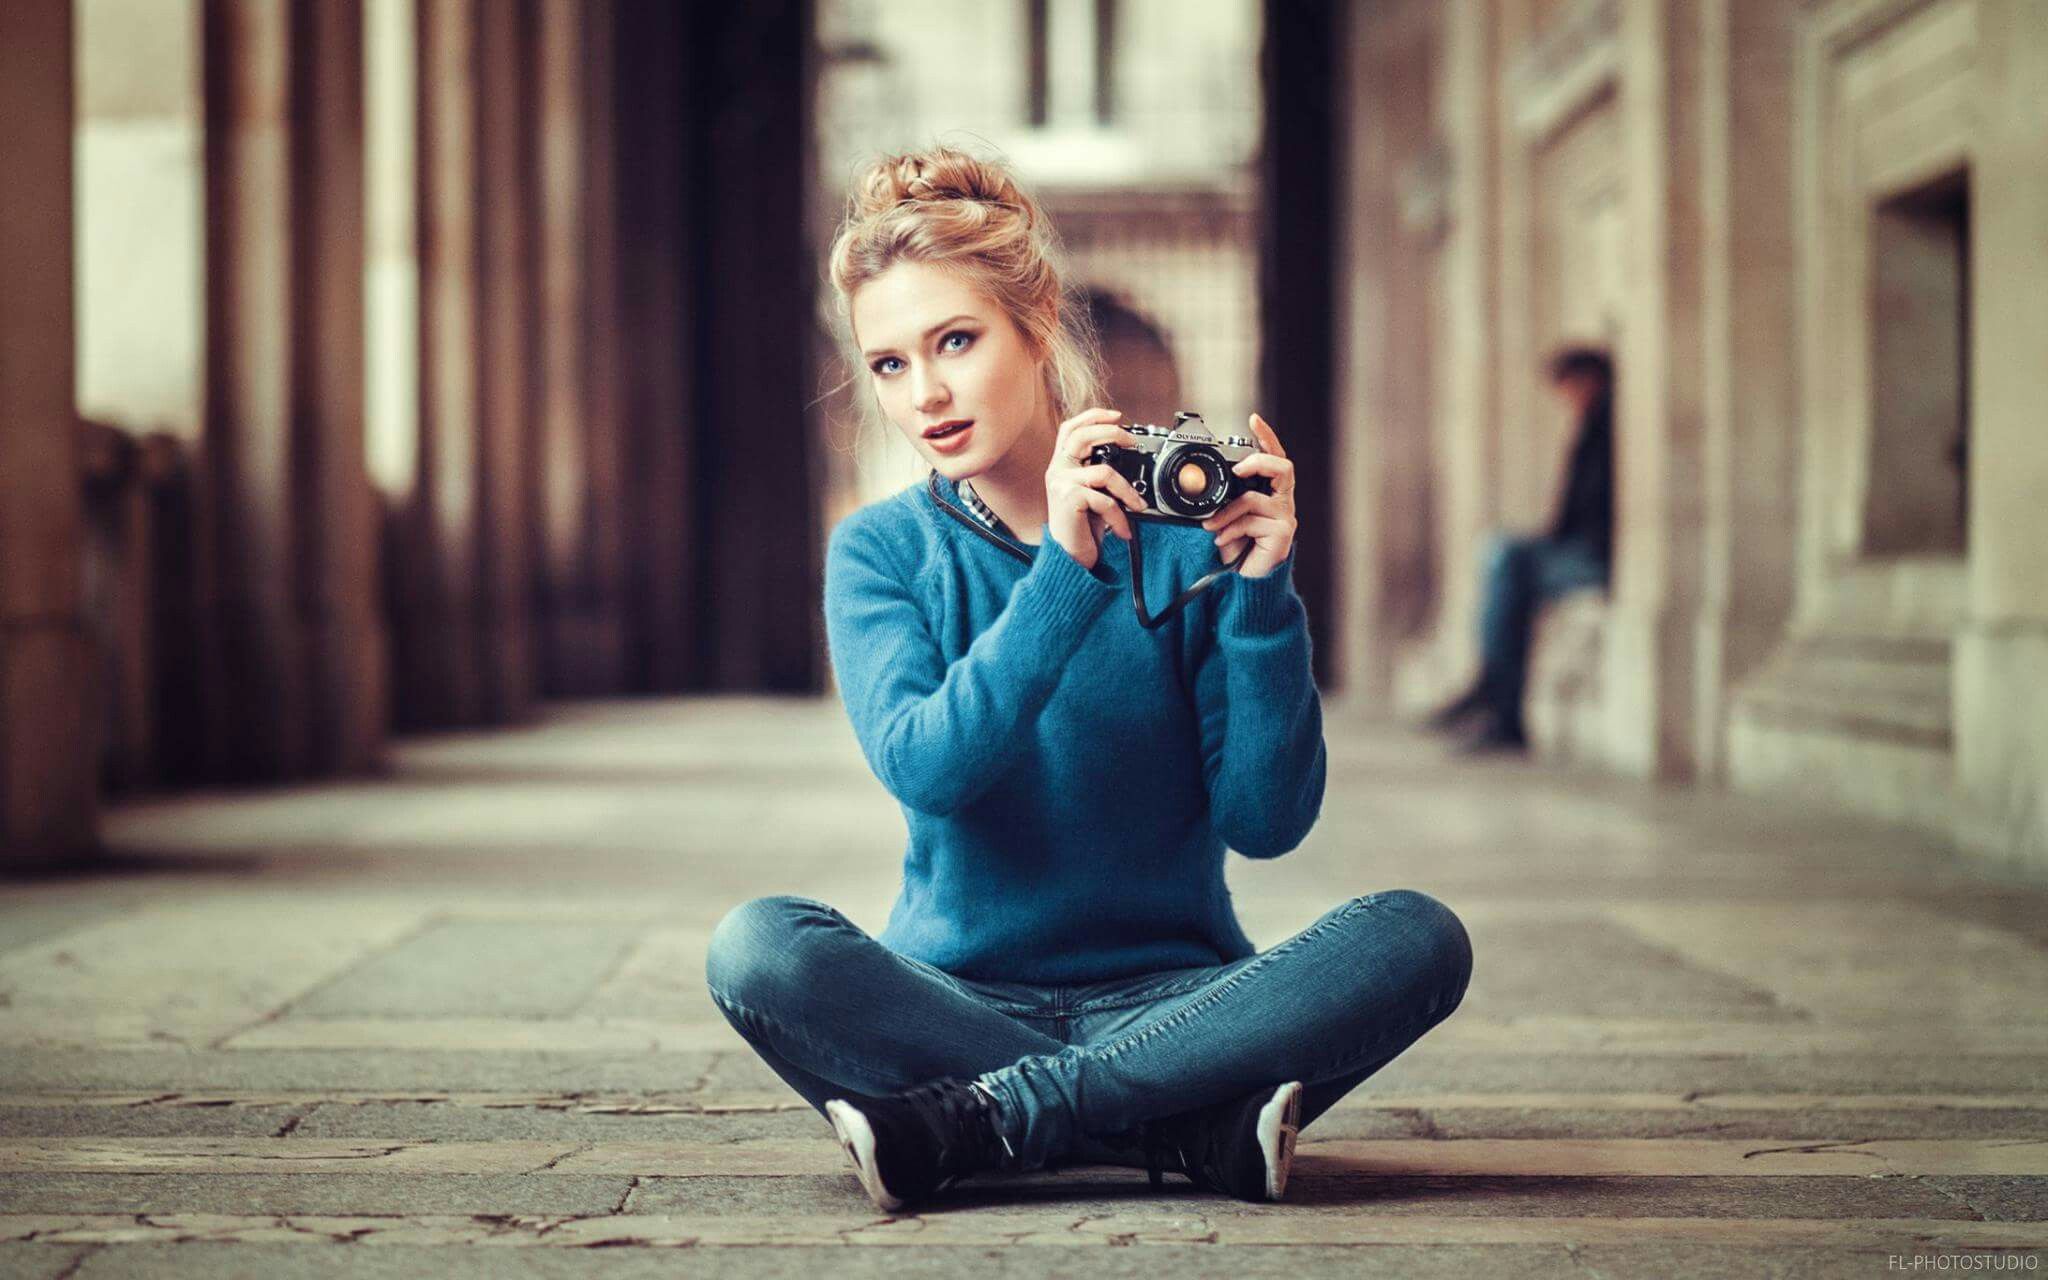 Eva Mikulski wearing blue long sleeves and denim pants while holding a camera